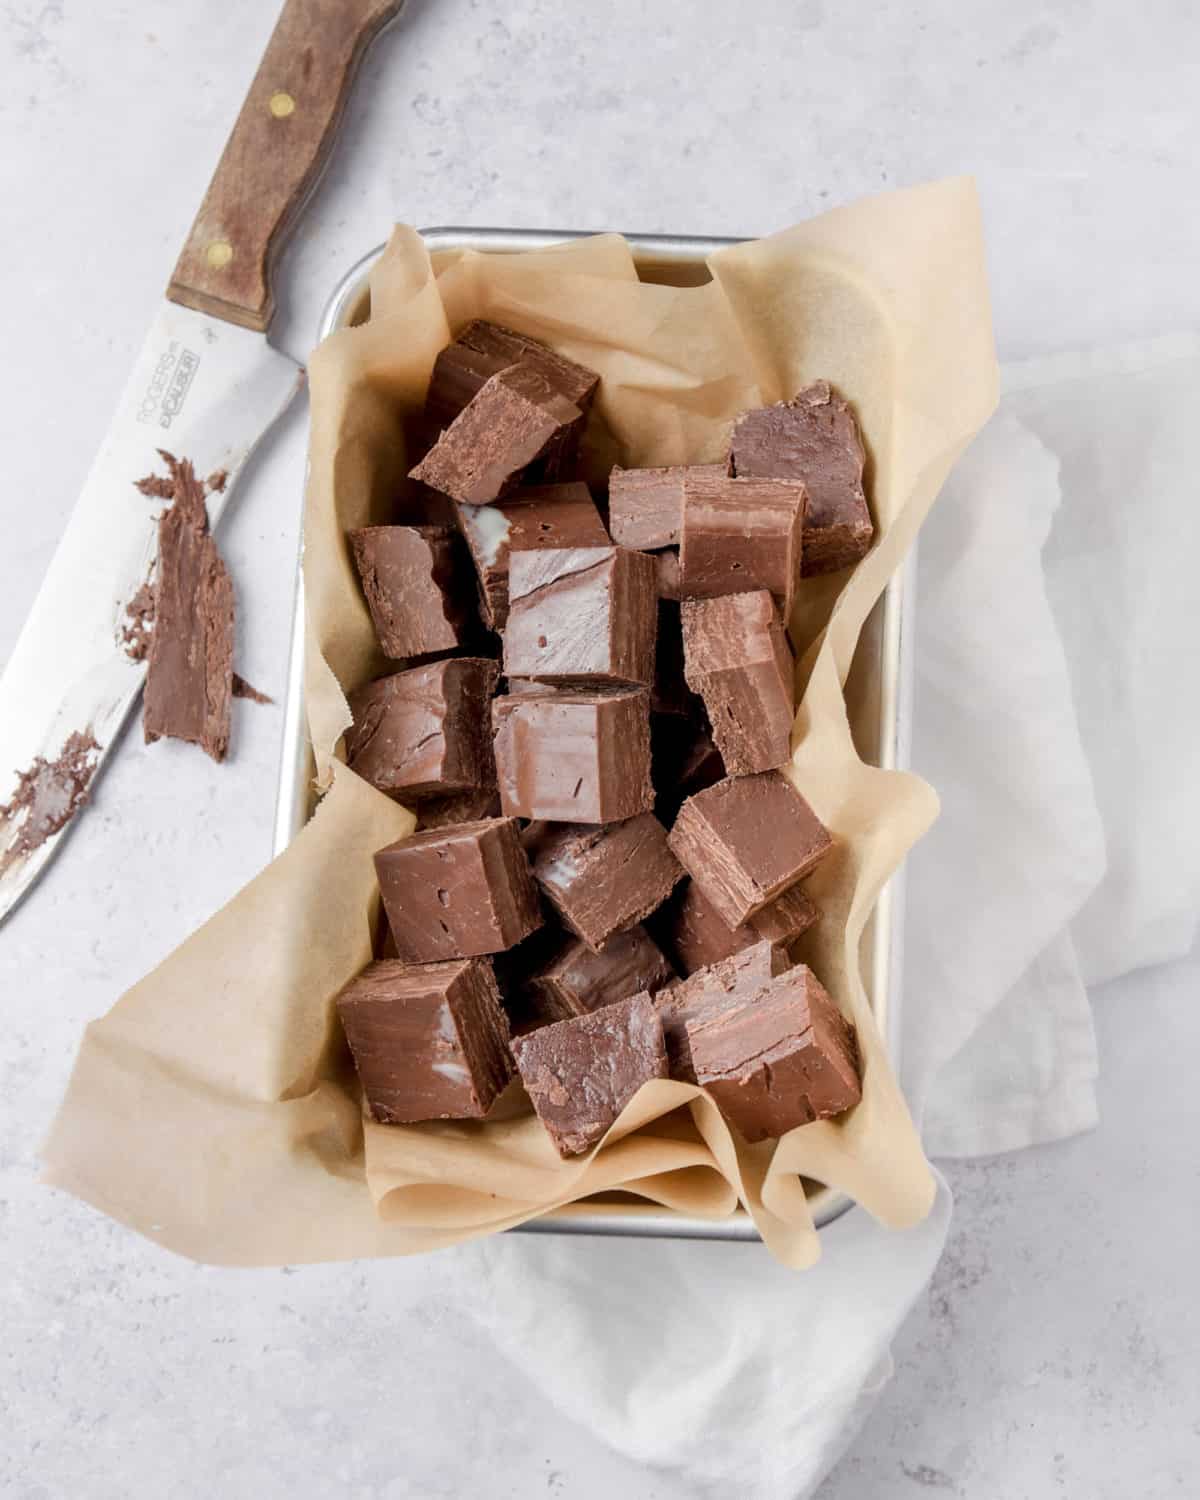 Chocolate fudge squares in a baking pan.